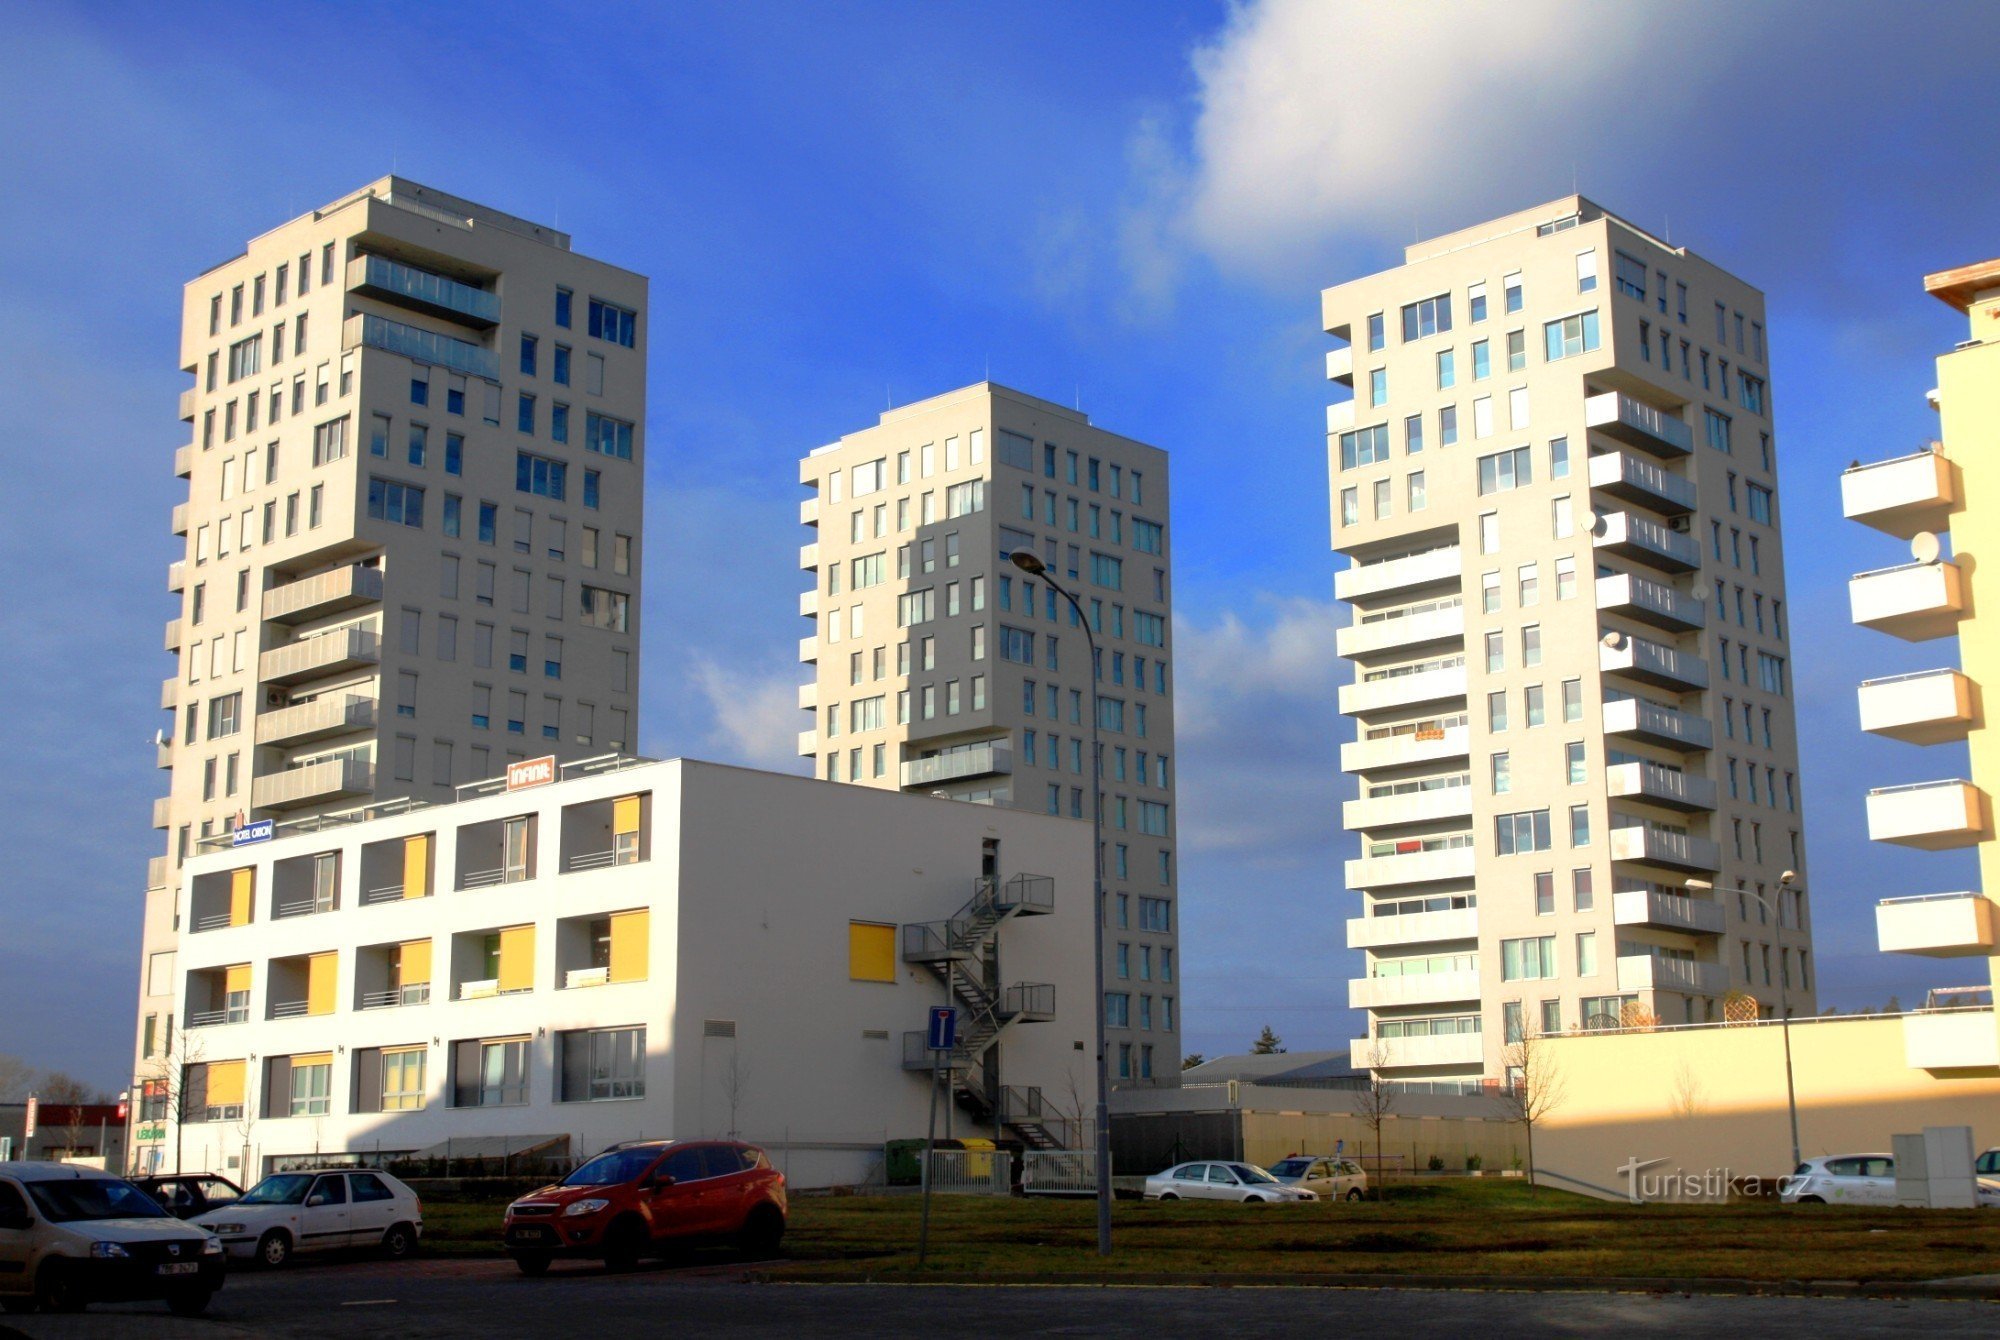 Orion apartment complex